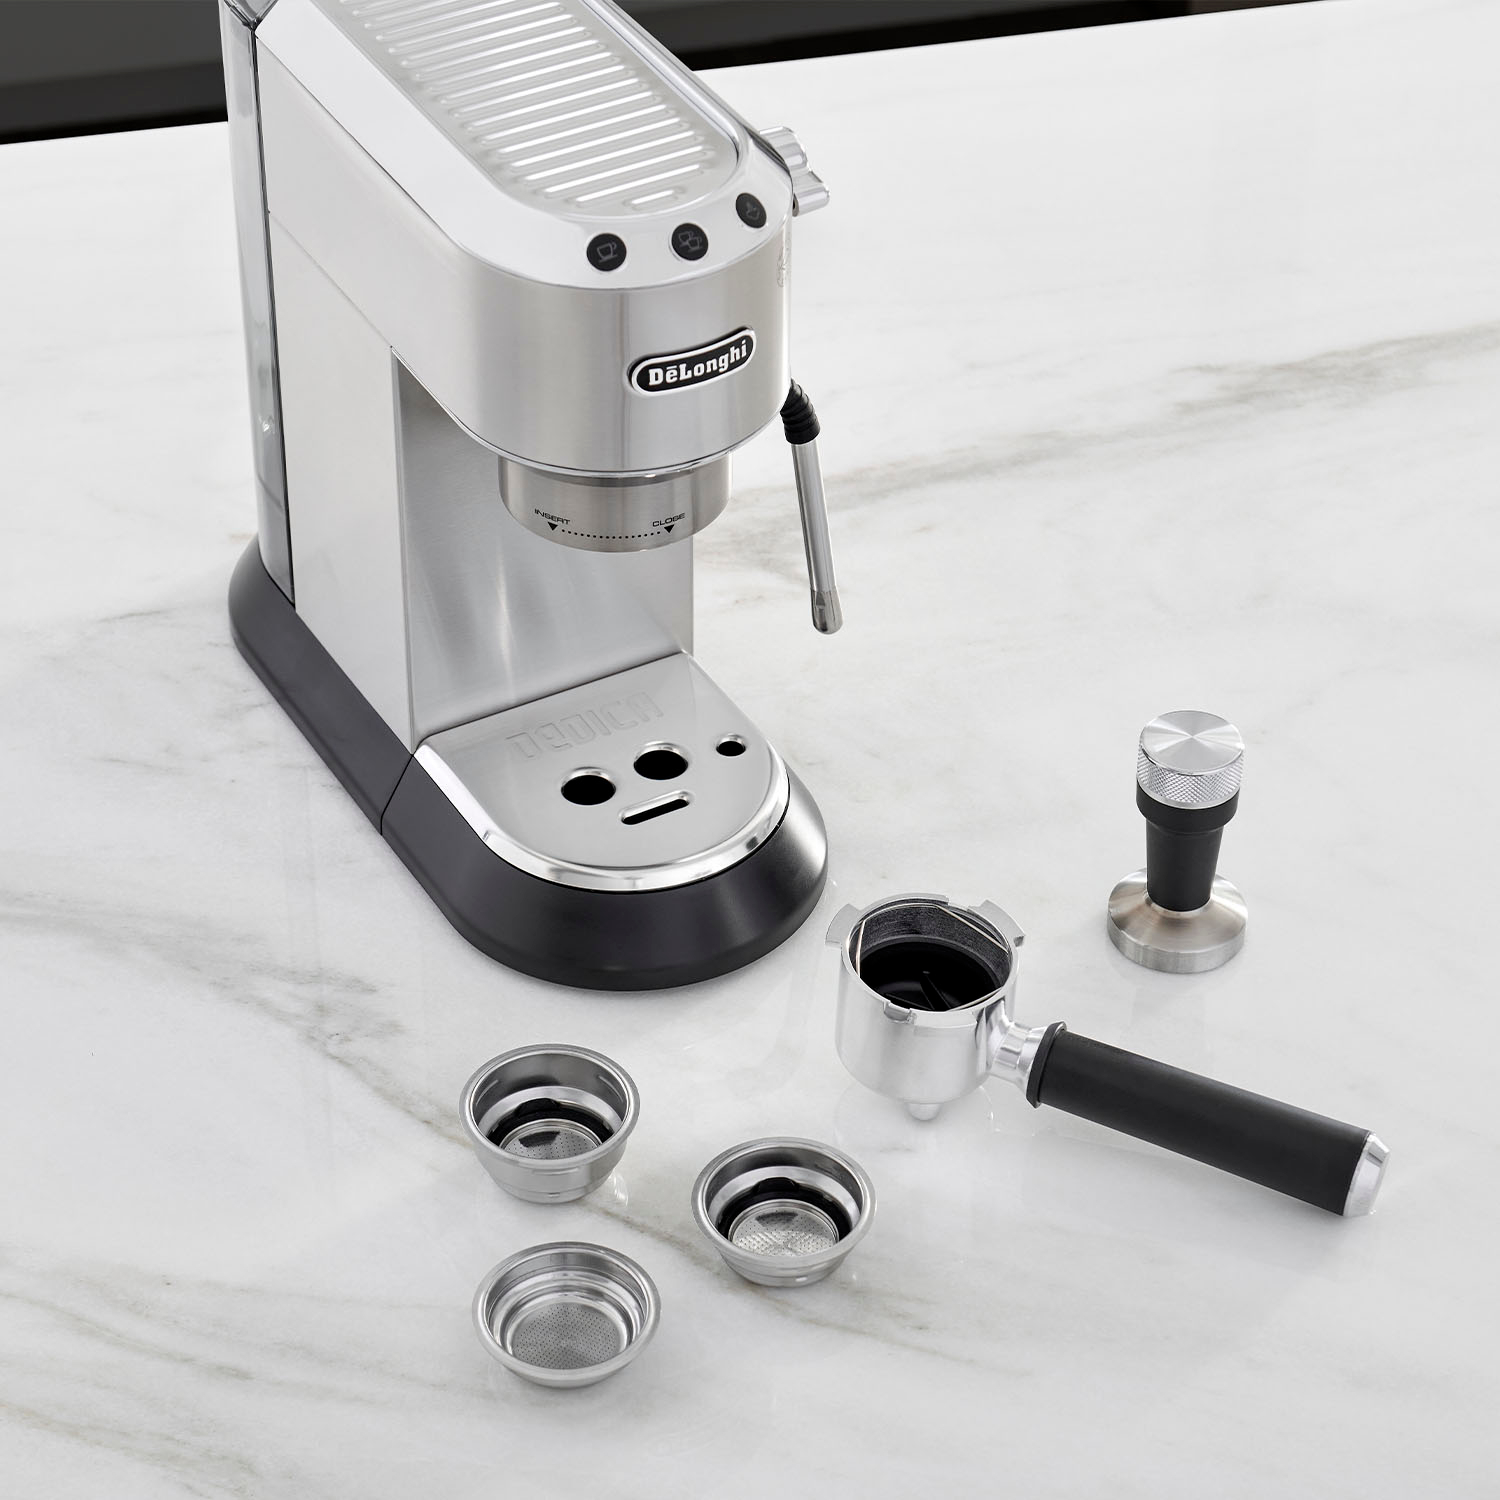 De'Longhi Dedica Arte Pump Espresso Coffee Machines (Beige), EC885.BG